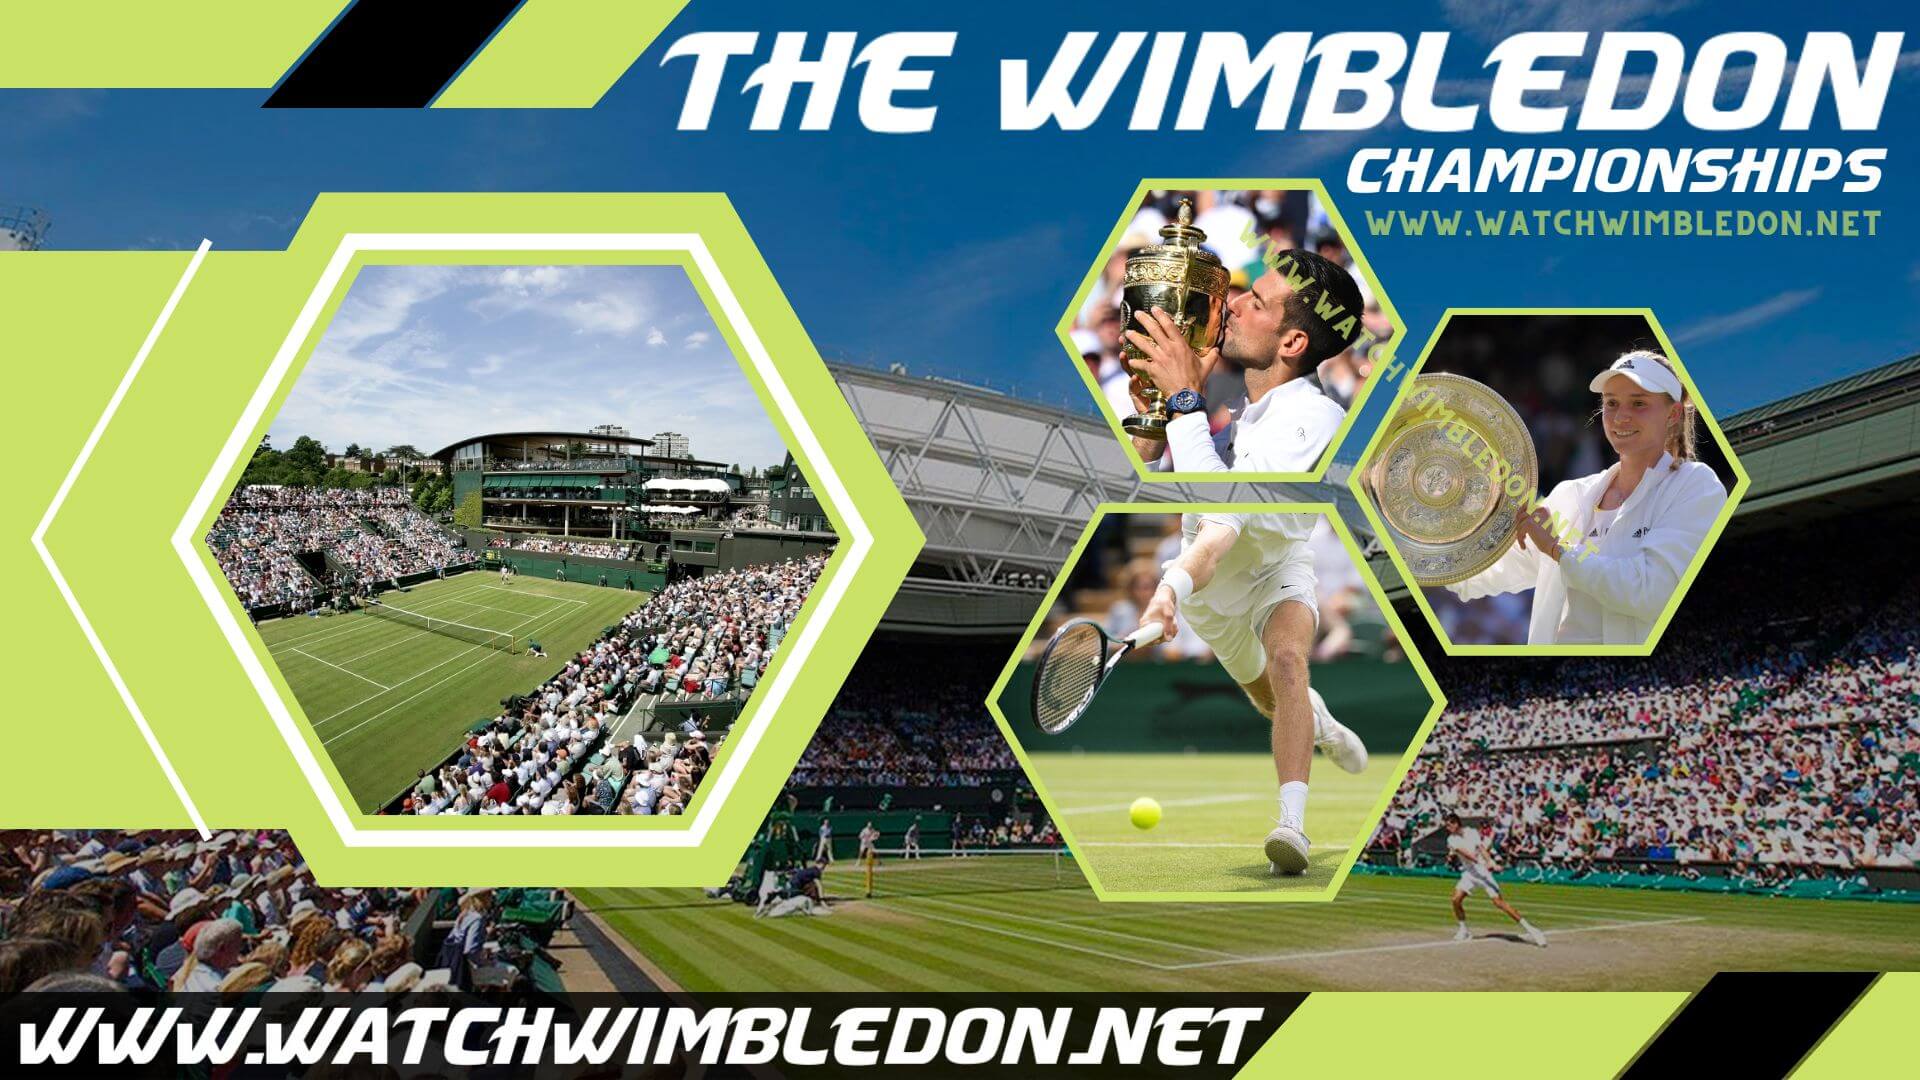 The Championships Wimbledon Schedule